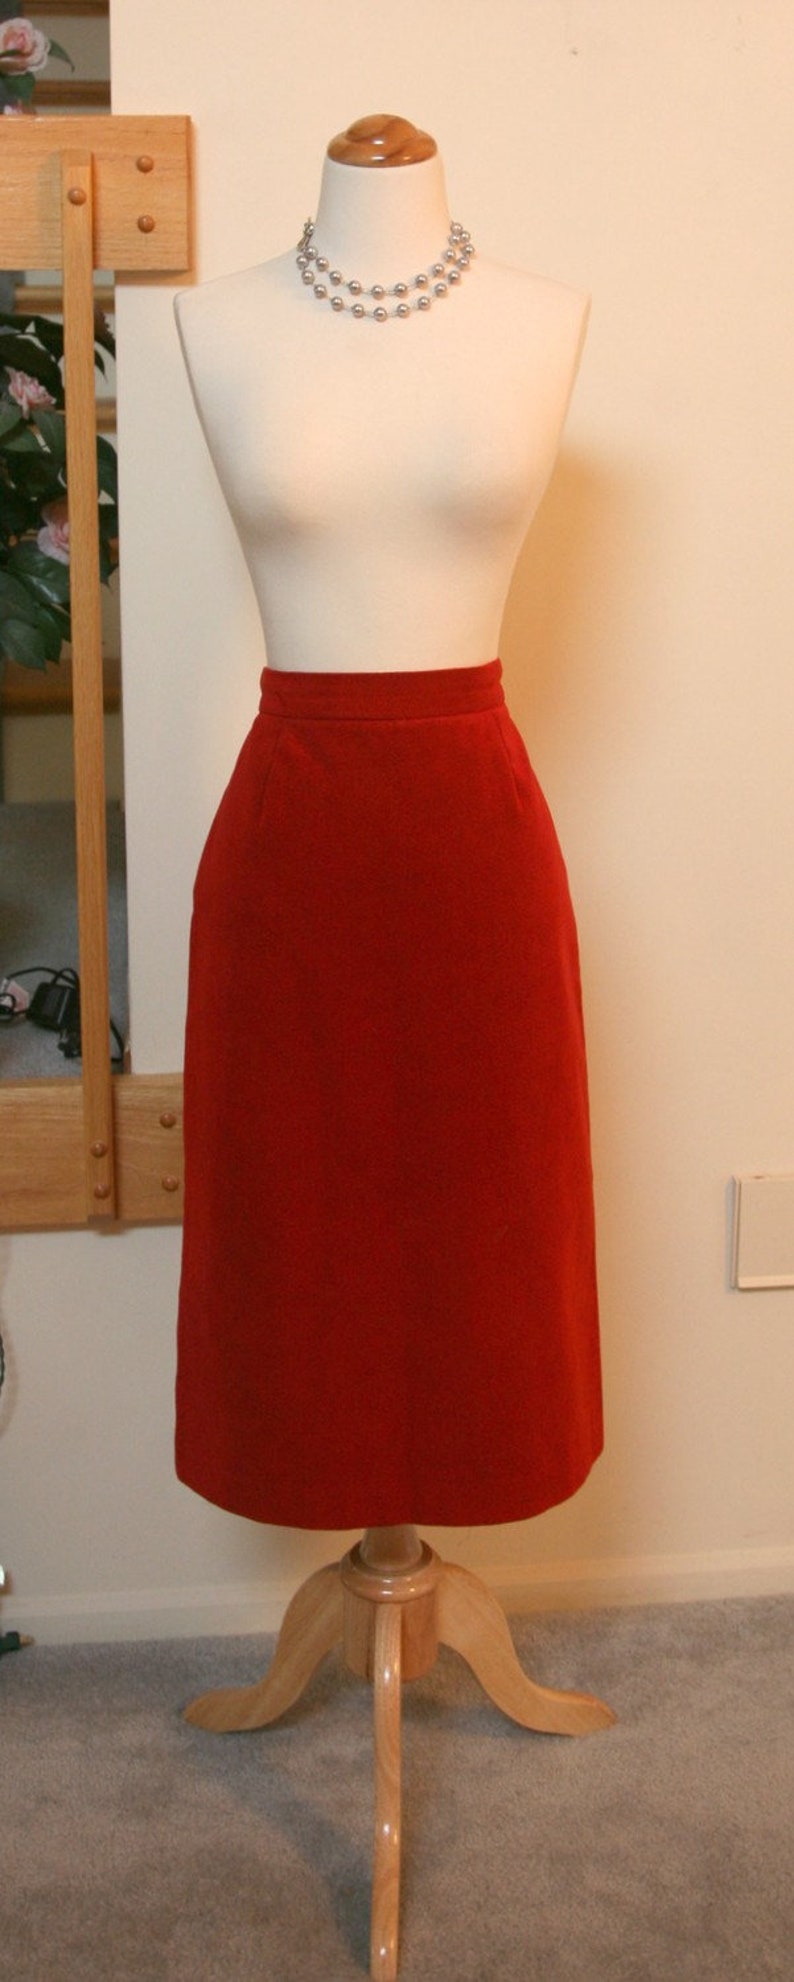 Red Suede Skirt, Pencil Skirt, Suede Skirt, Mid Calf, Long Skirt, Woman's Dressy Skirt, Work Attire, Soft Suede Skirt, 80's Attire image 1